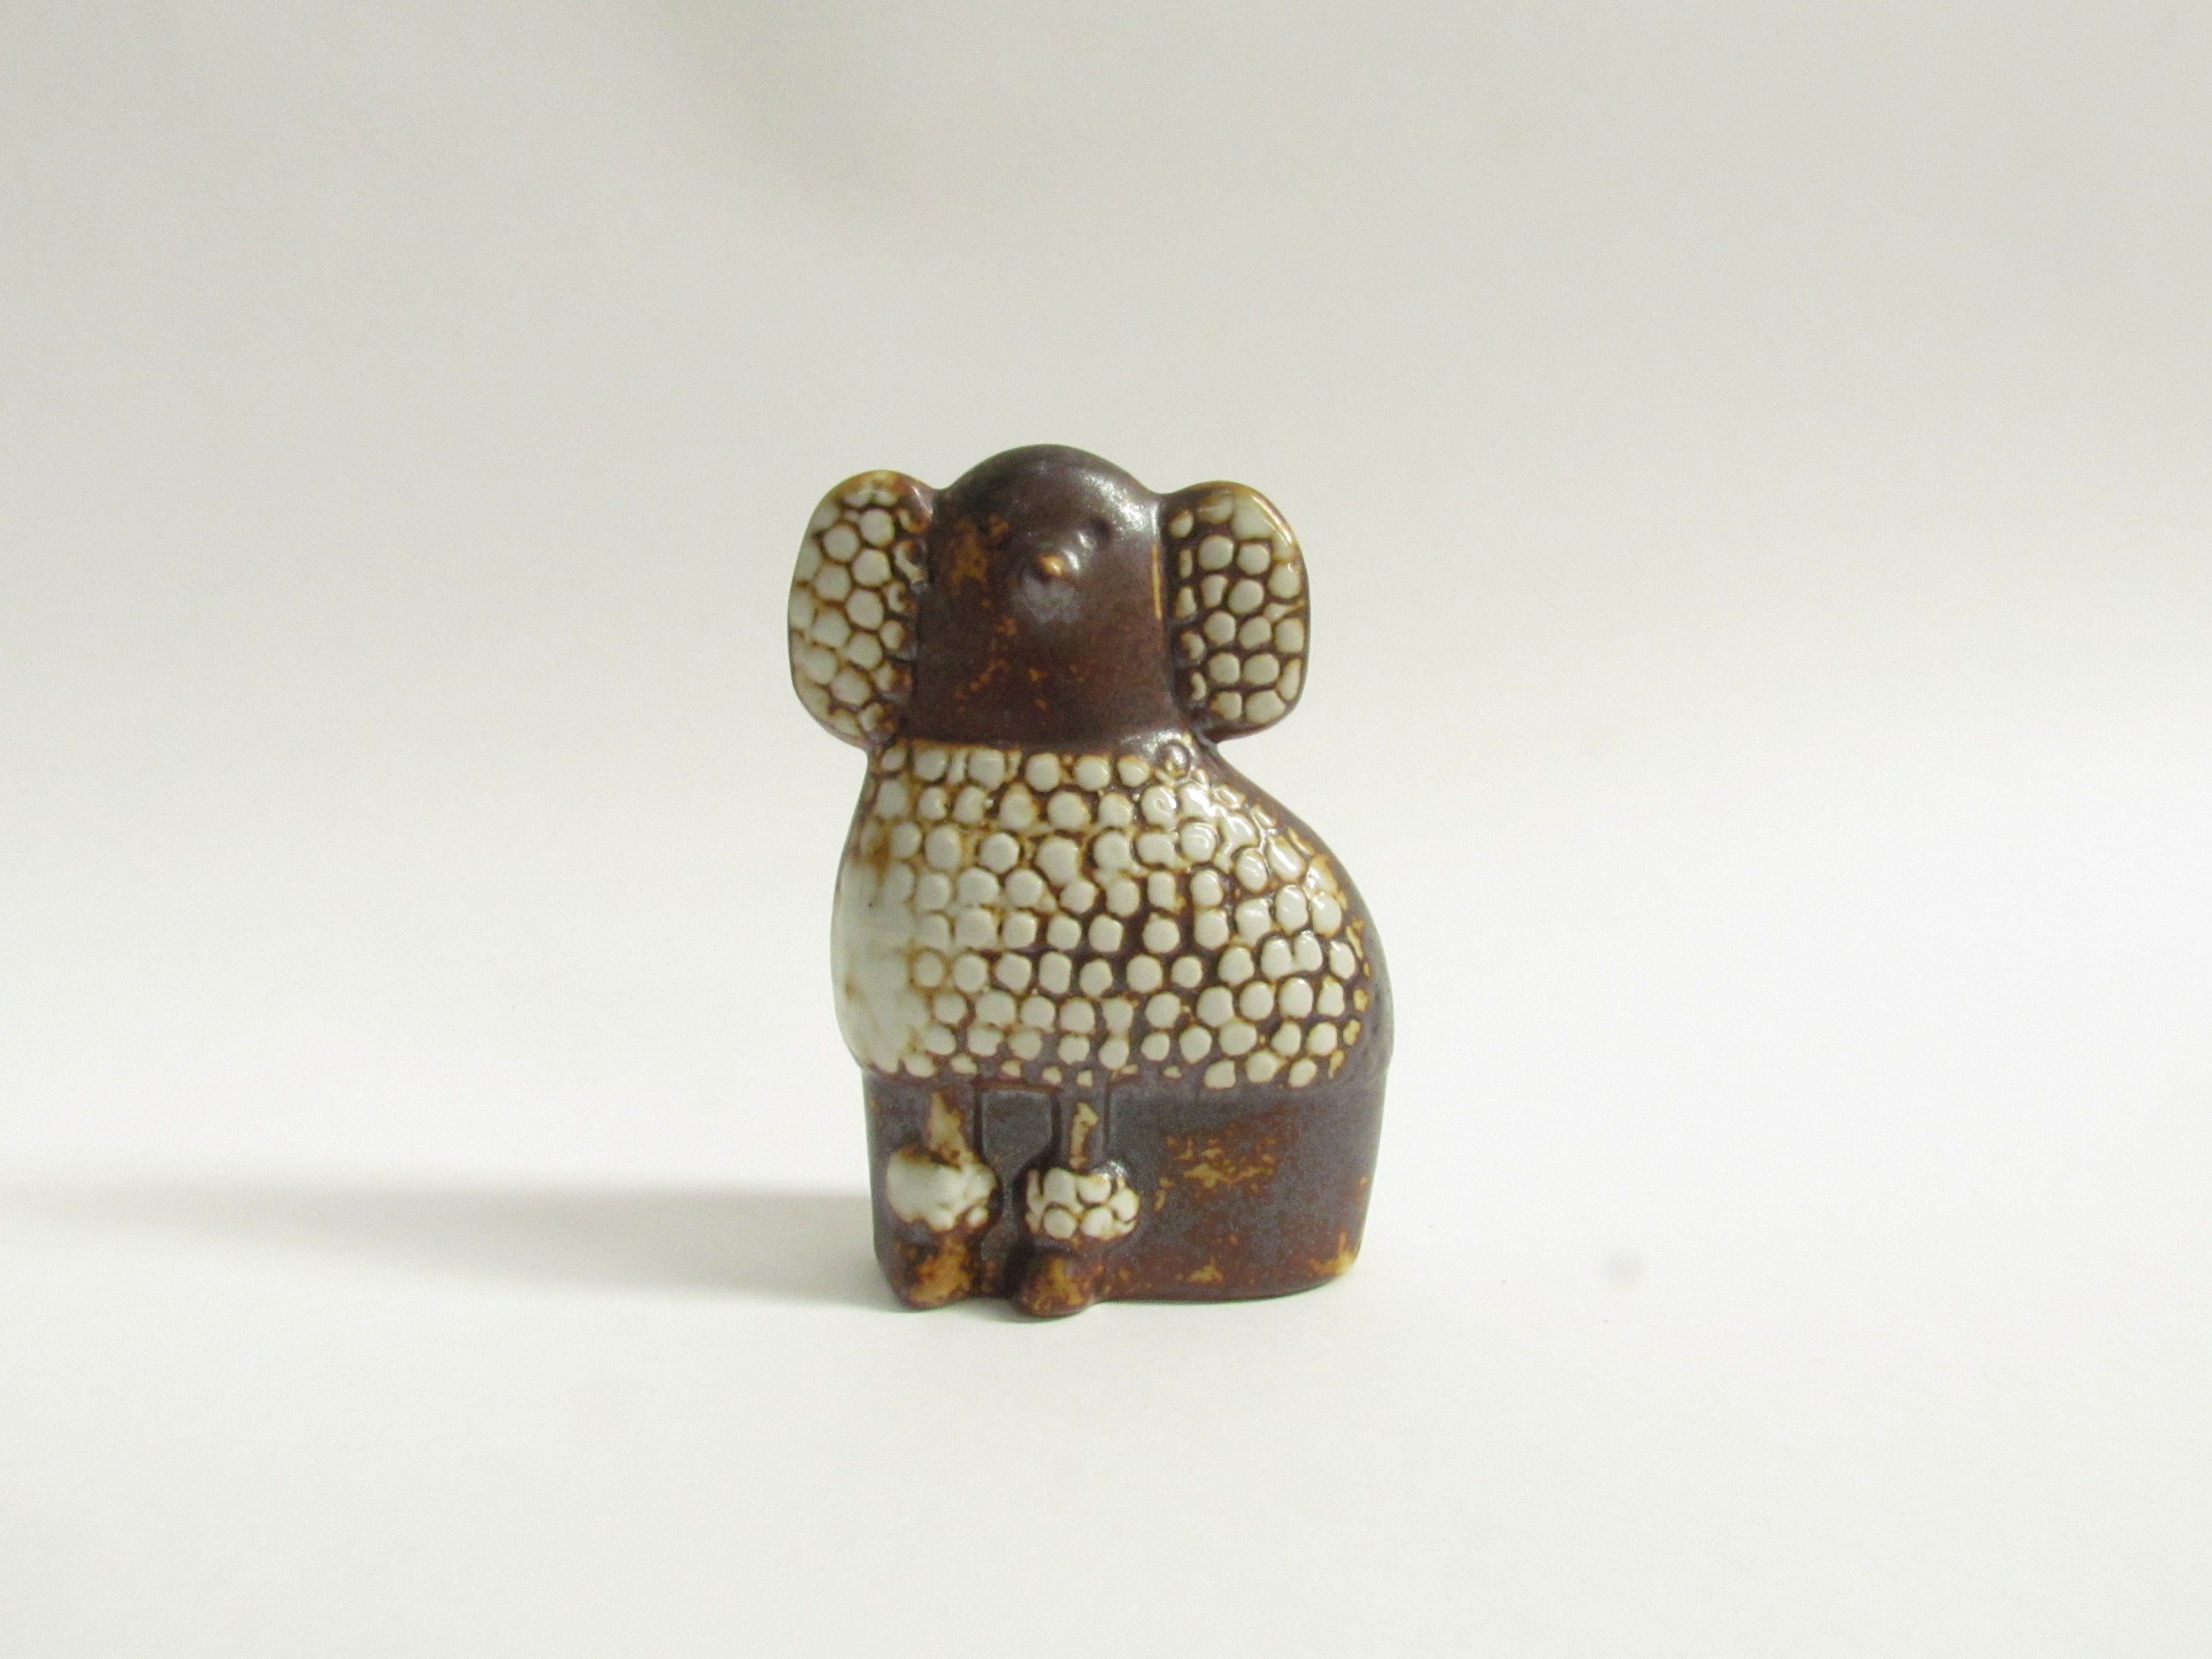 Lisa Larson for Gustavsberg - A ceramic figure of a Poodle. Impressed marks to base. 9cm high